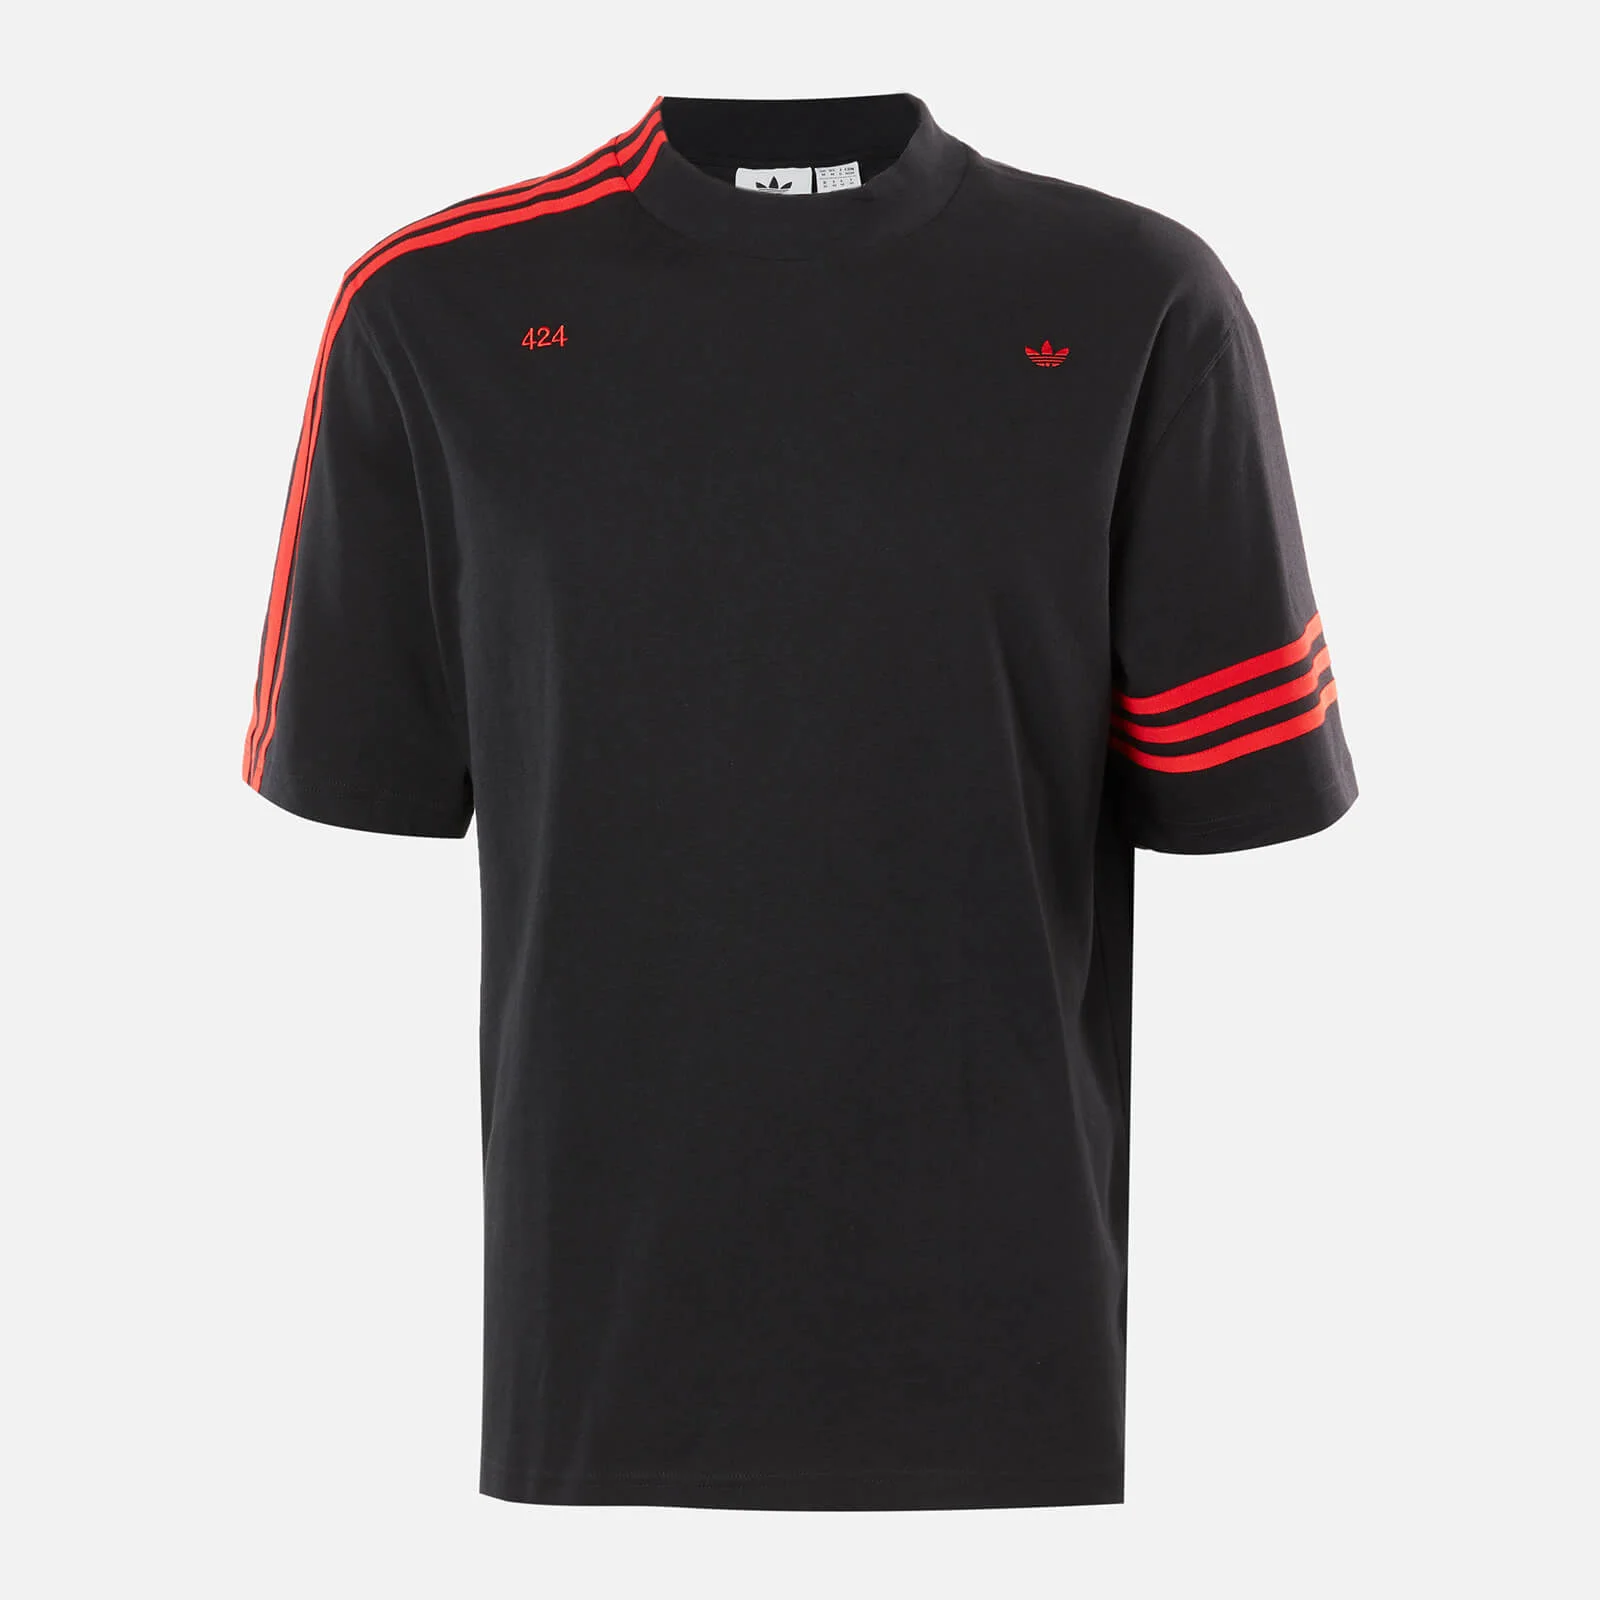 adidas X 424 Men's Vocal T-Shirt - Black Image 1